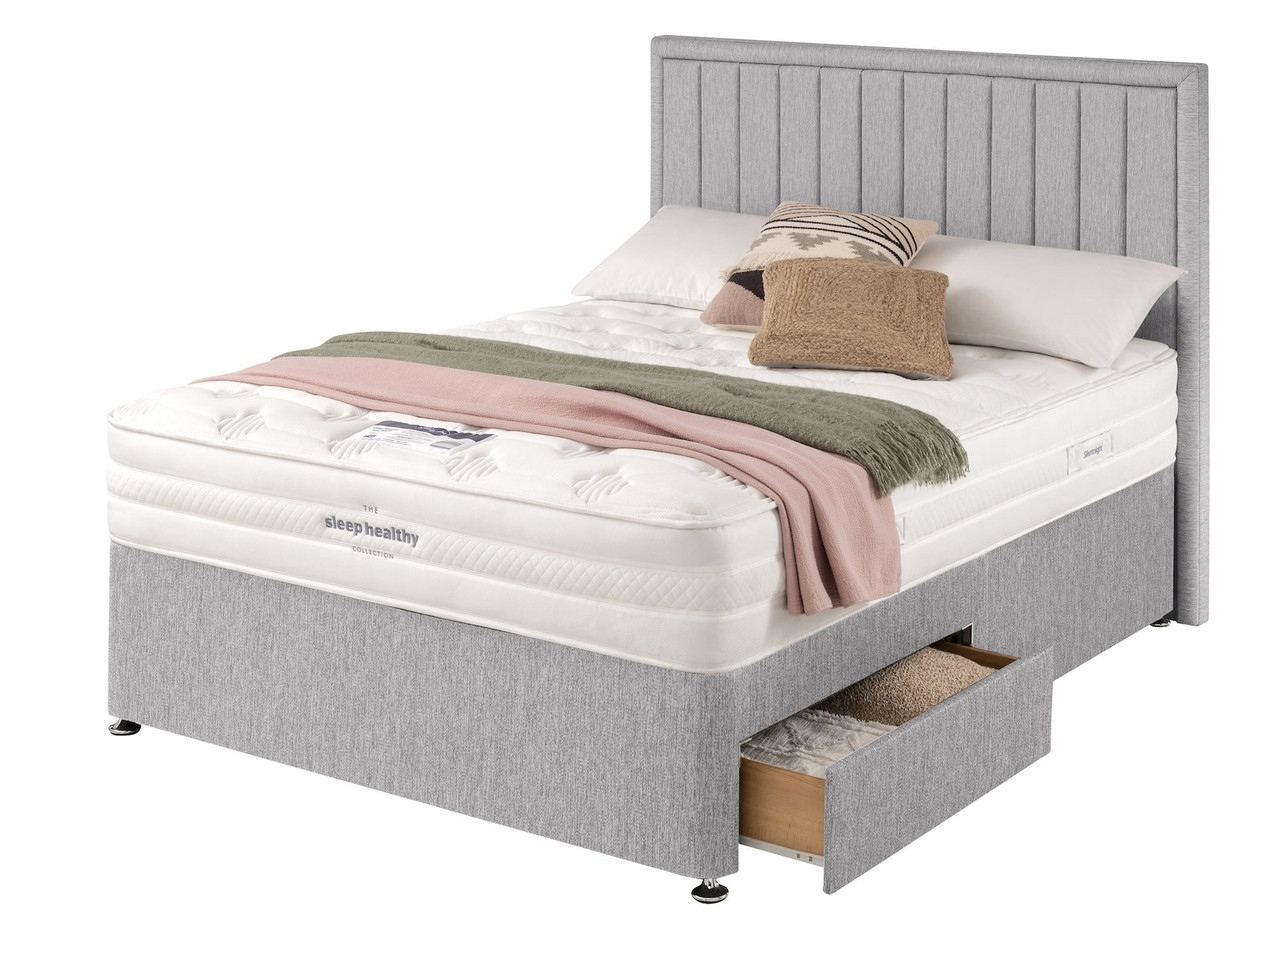 Silentnight Sleep Healthy Eco 2000 Divan Bed Set Double Sea Lavender